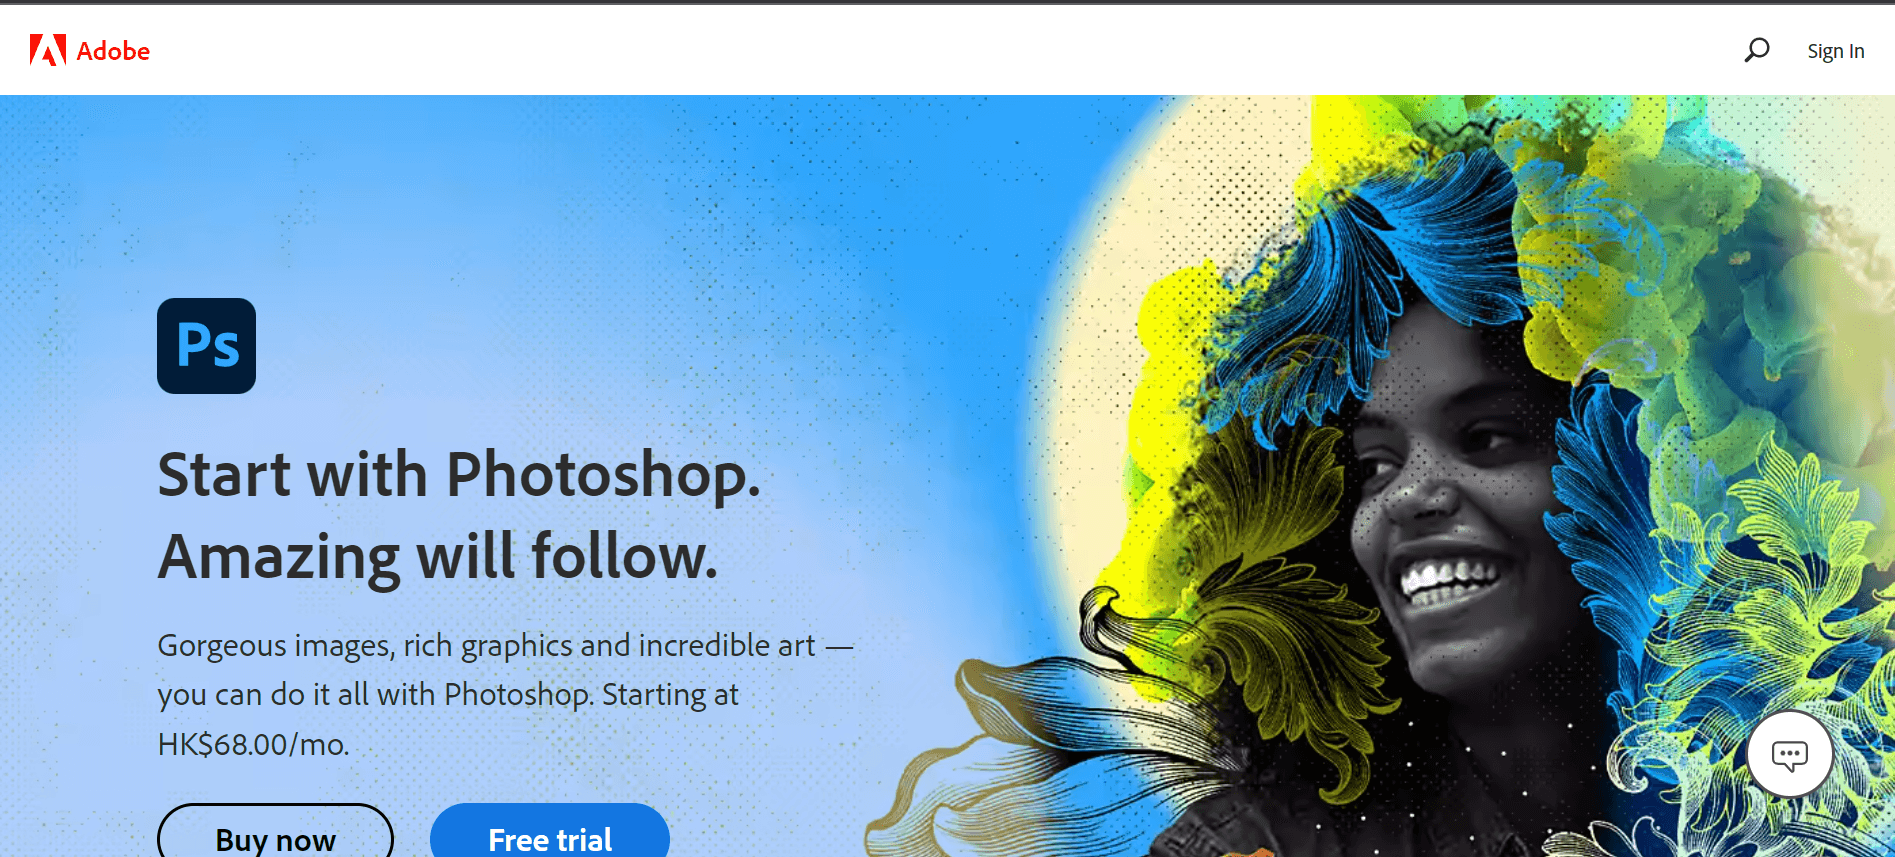 Adobe Photoshop's website